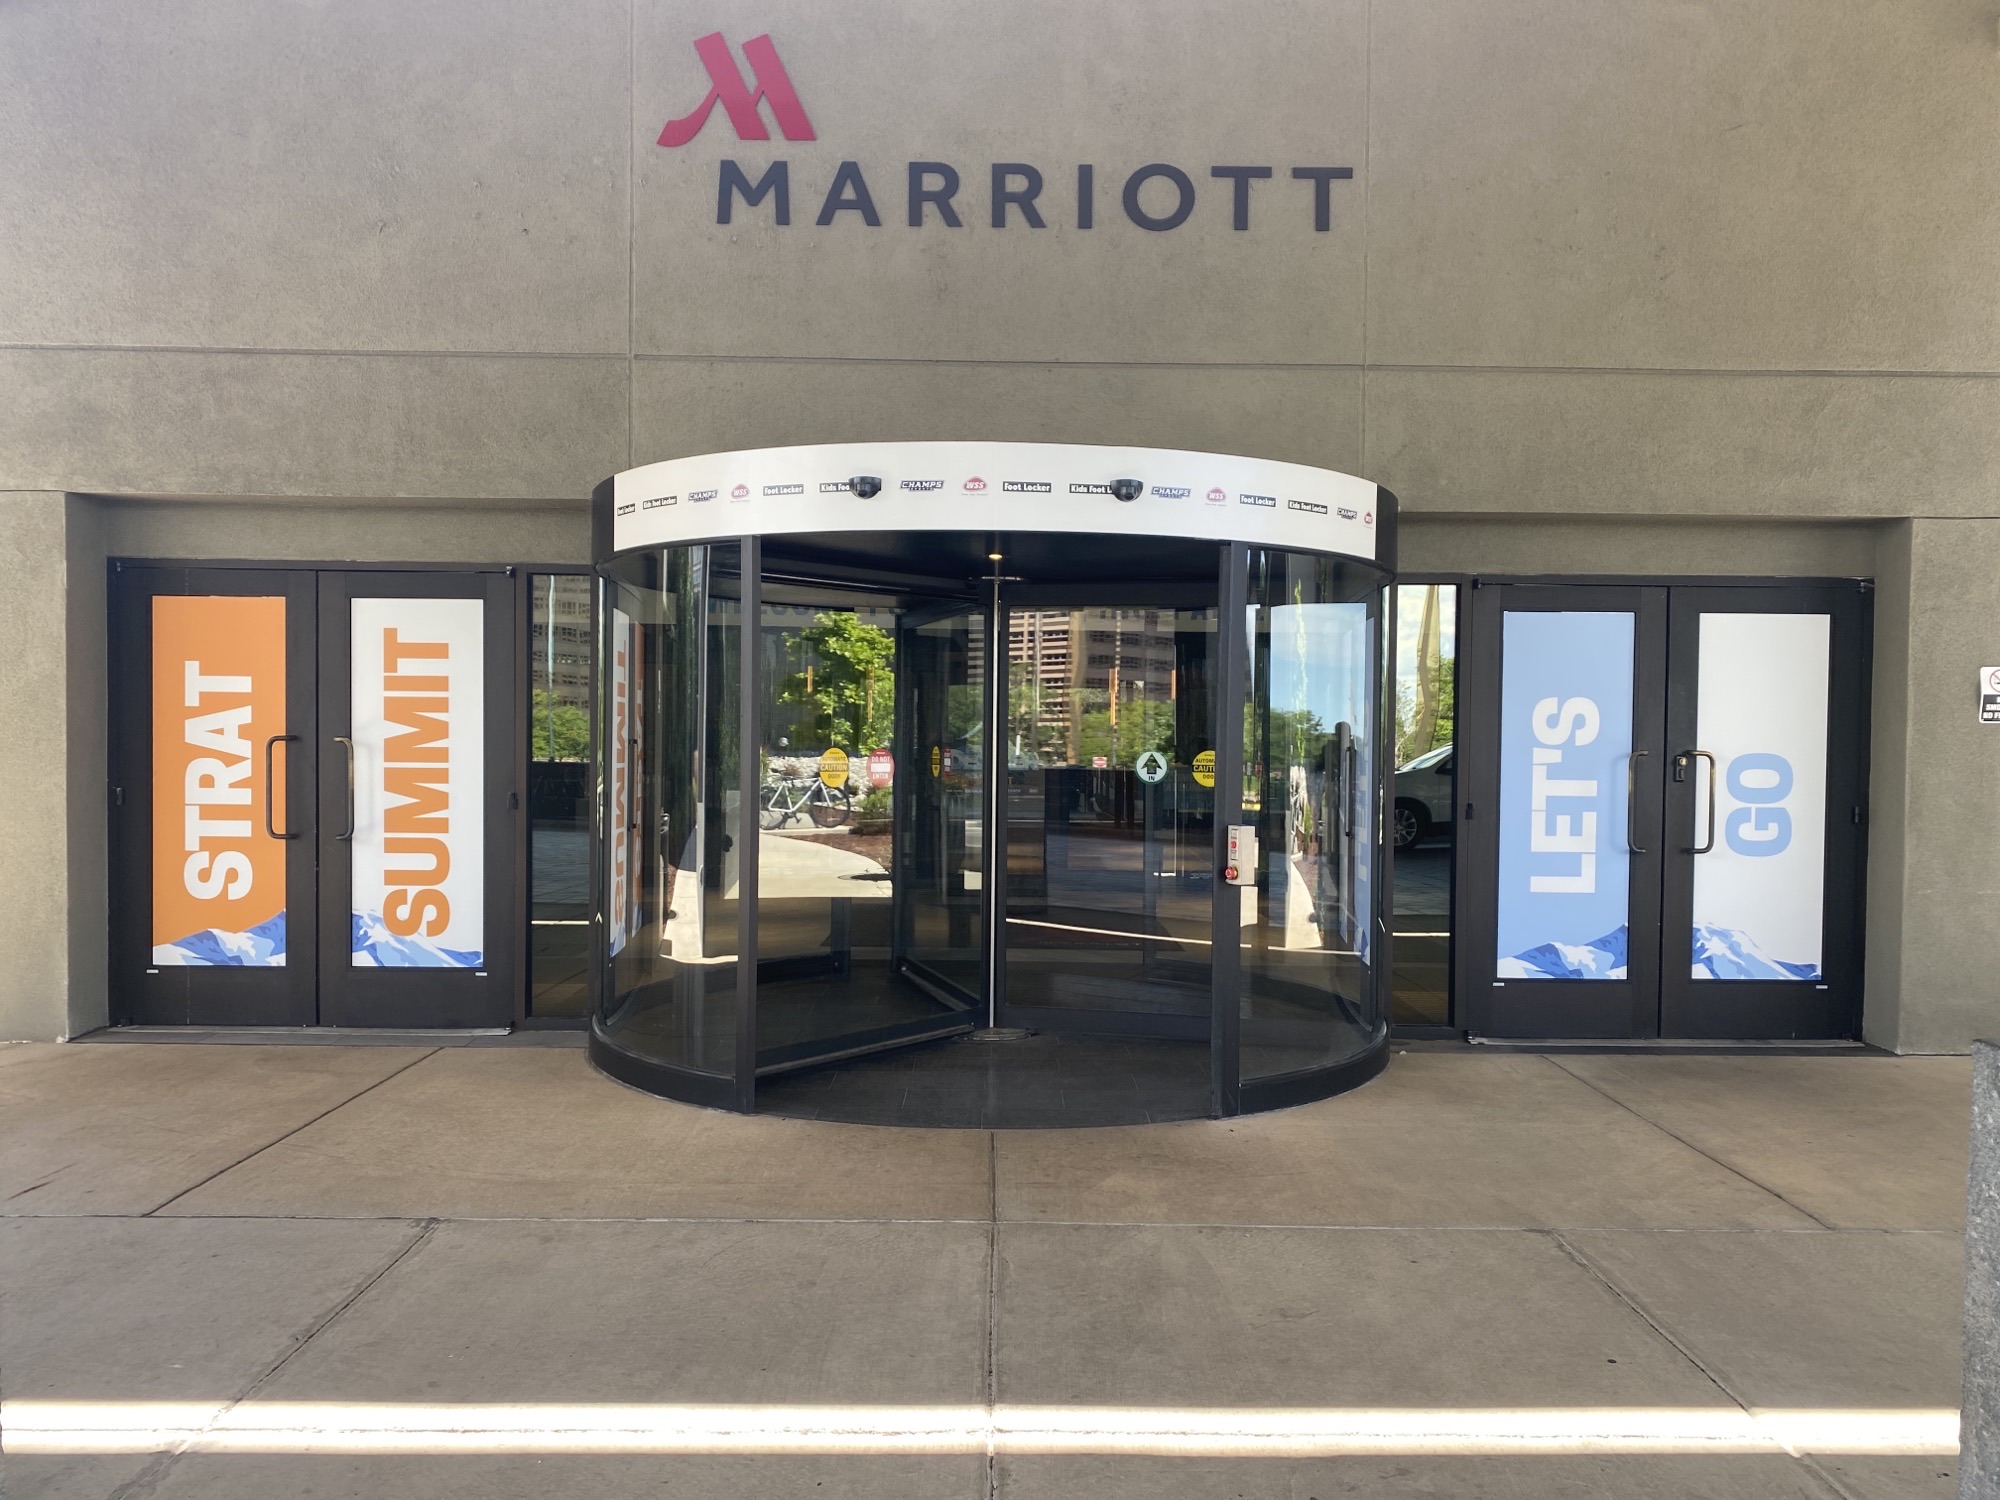 Marriott Hotel Event Signage Installation